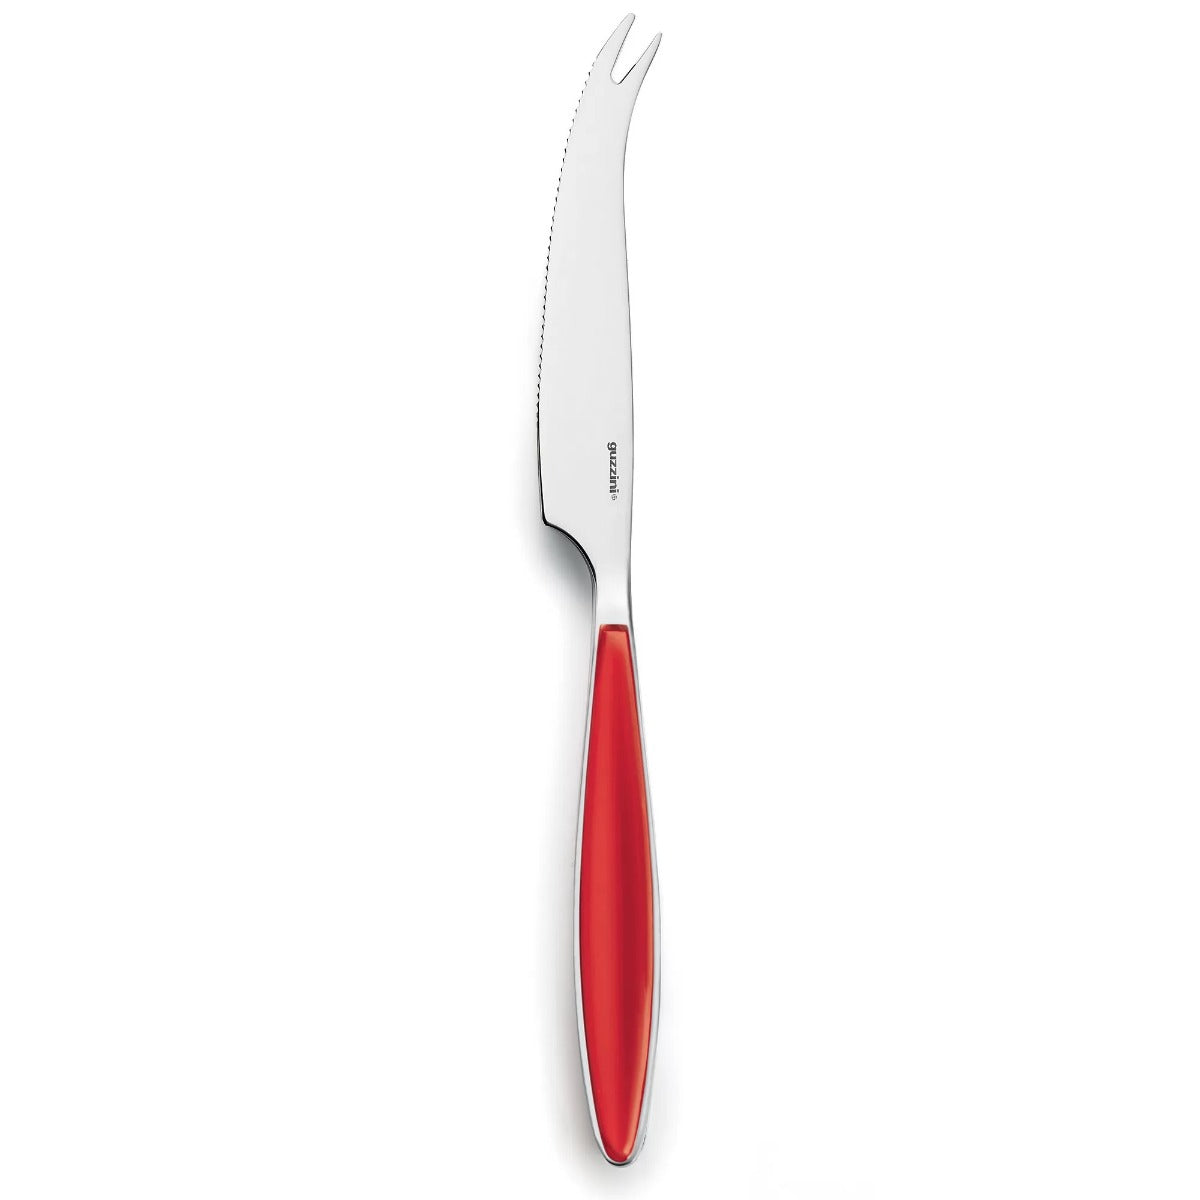 Guzzini cheese knife, red